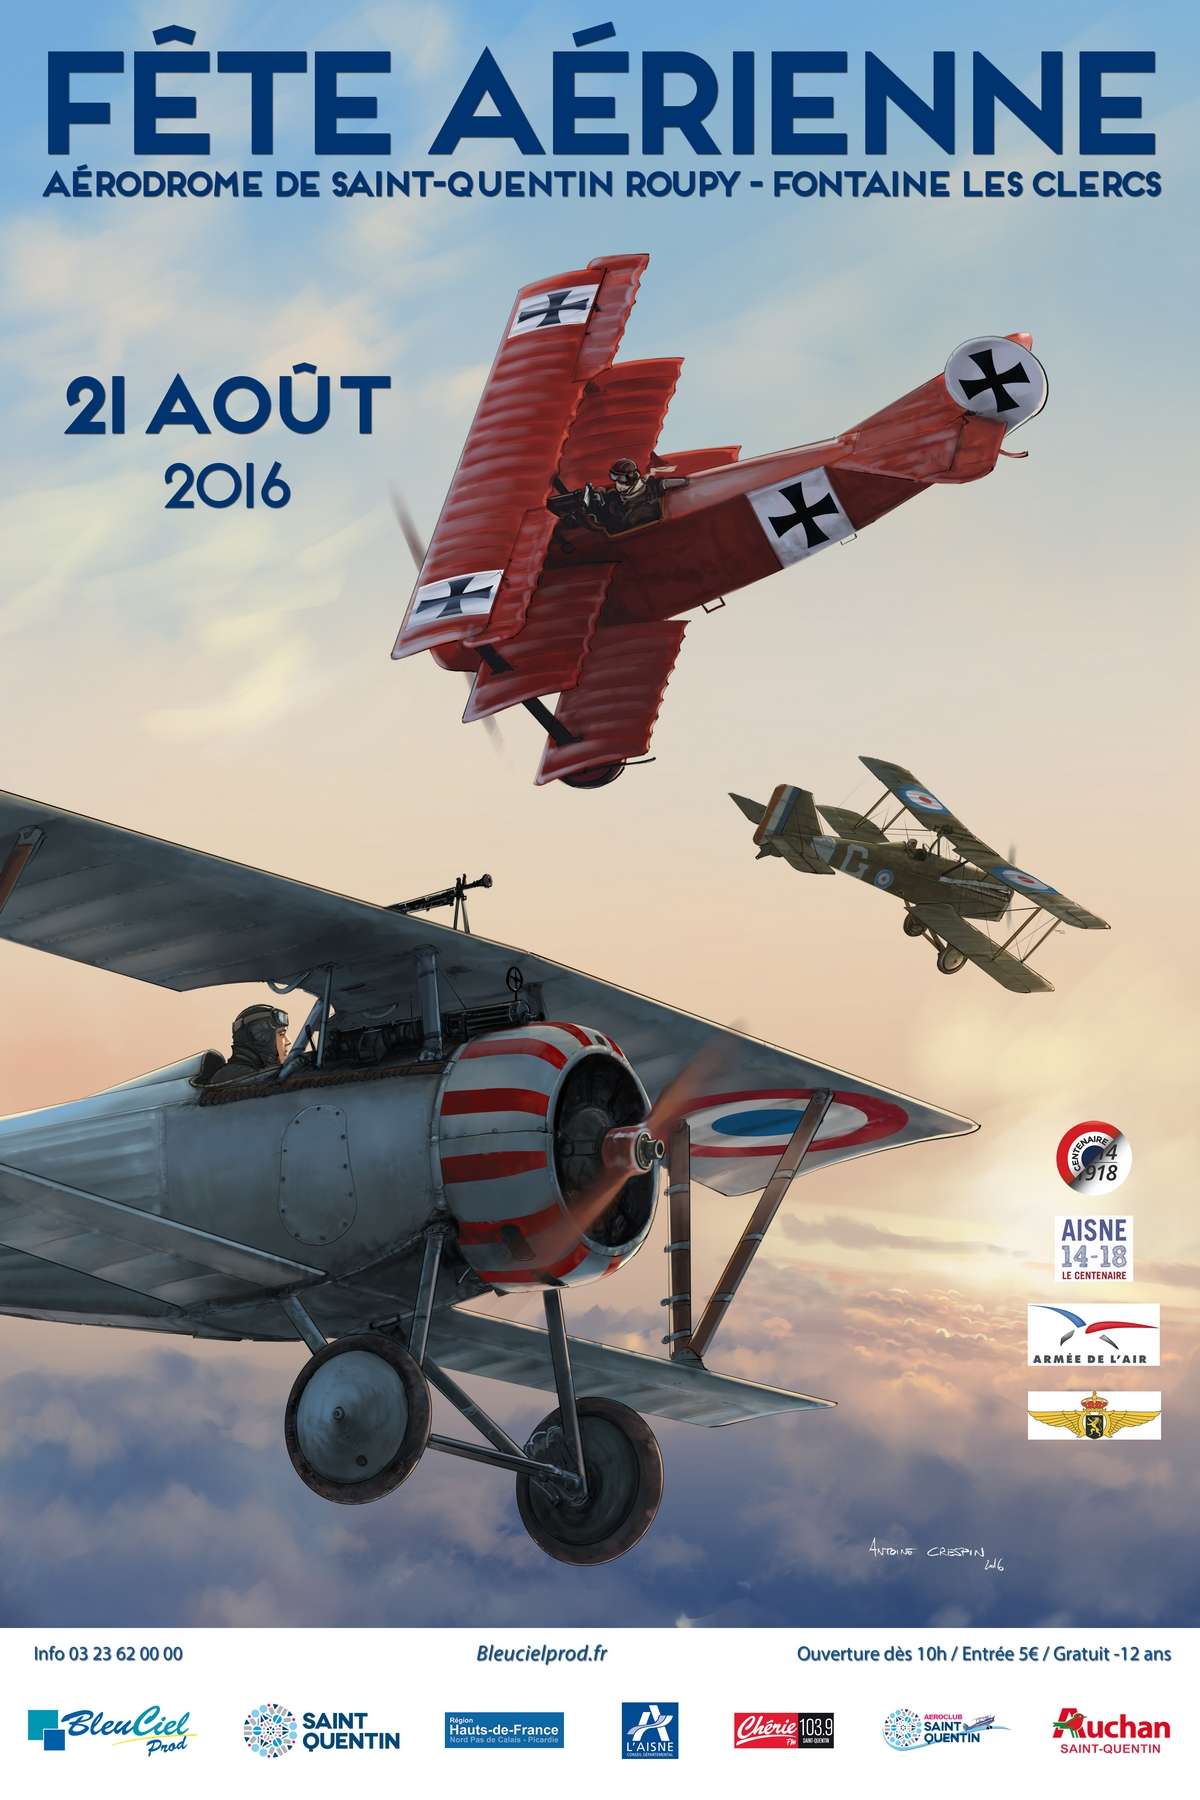 Fête Aérienne ST-Quentin/Roupy 2016, Meeting Aerien 2016, Airshow 2016, French Airshow 2016